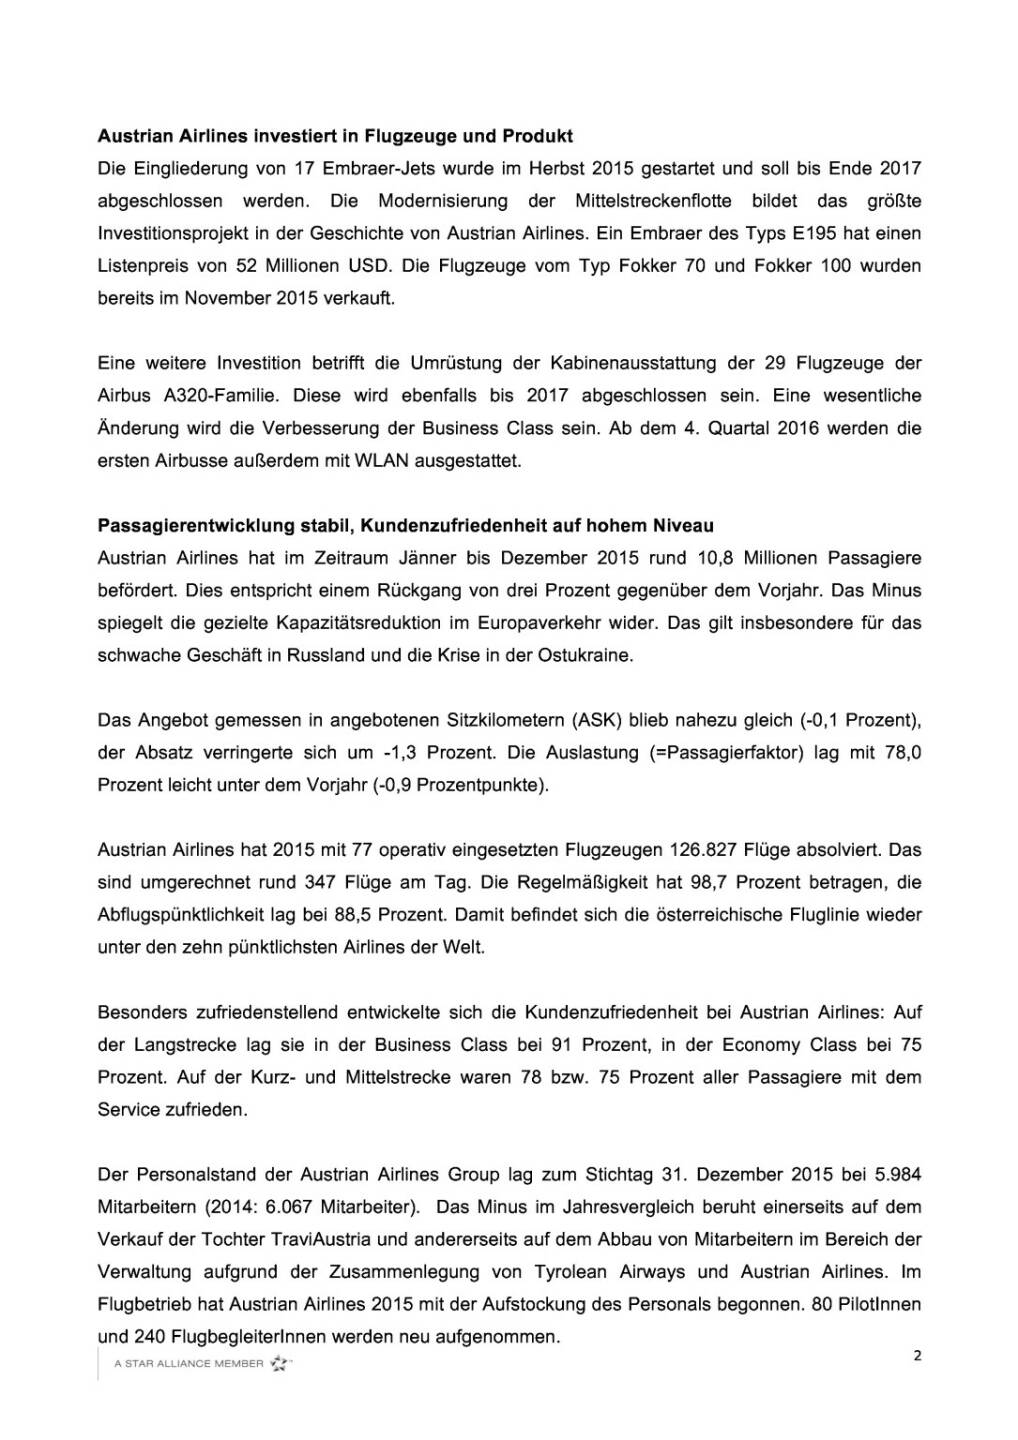 Austrian Airlines Ergebnis 2015, Seite 2/4, komplettes Dokument unter http://boerse-social.com/static/uploads/file_798_austrian_airlines_ergebnis_2015.pdf